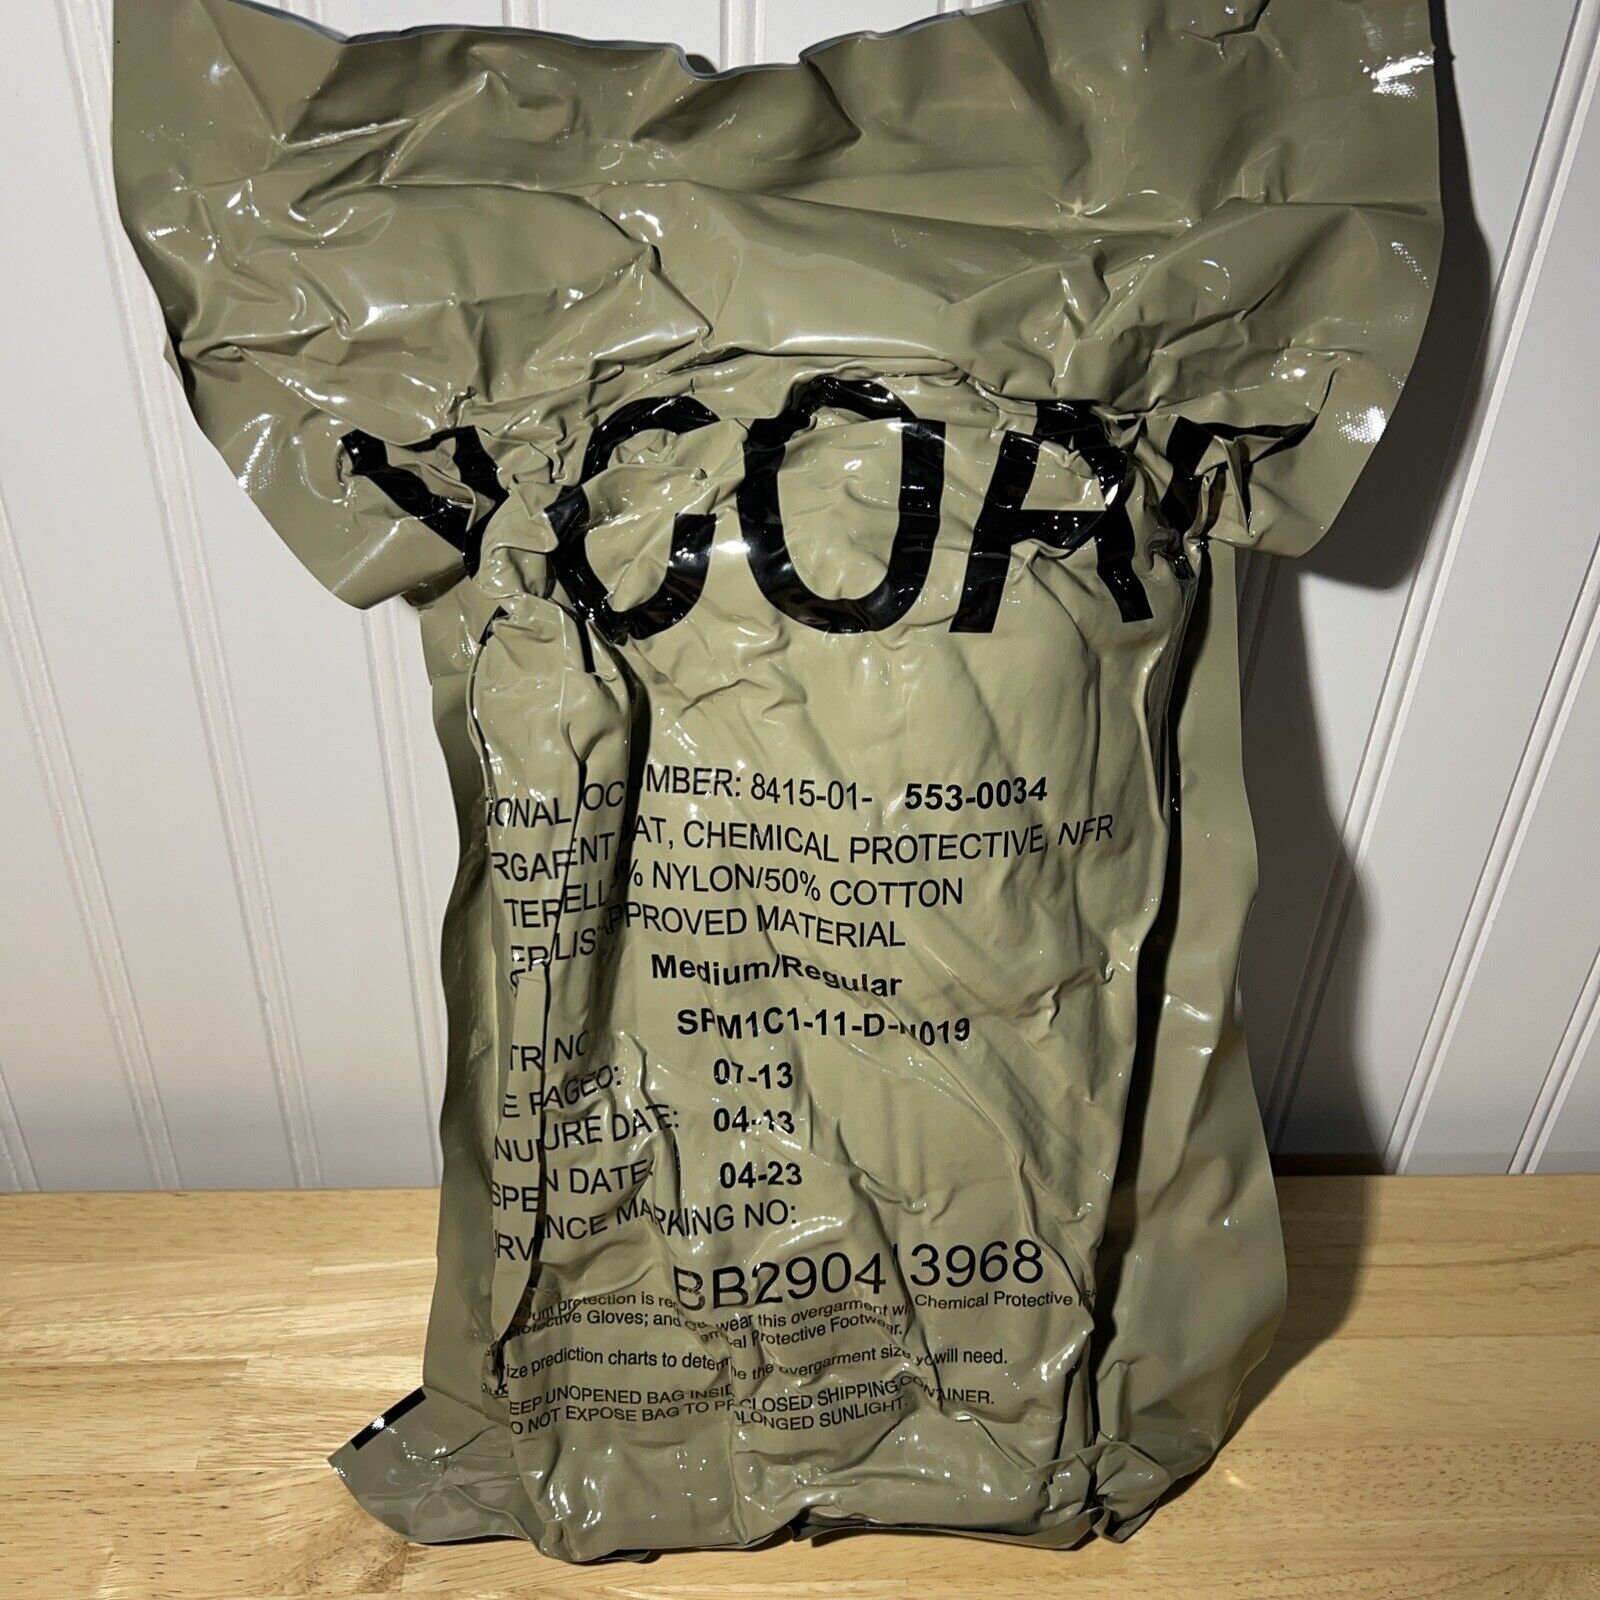 U Coat JSLIST Military Overgarment Coat Chemical Protective SIZE Medium Regular